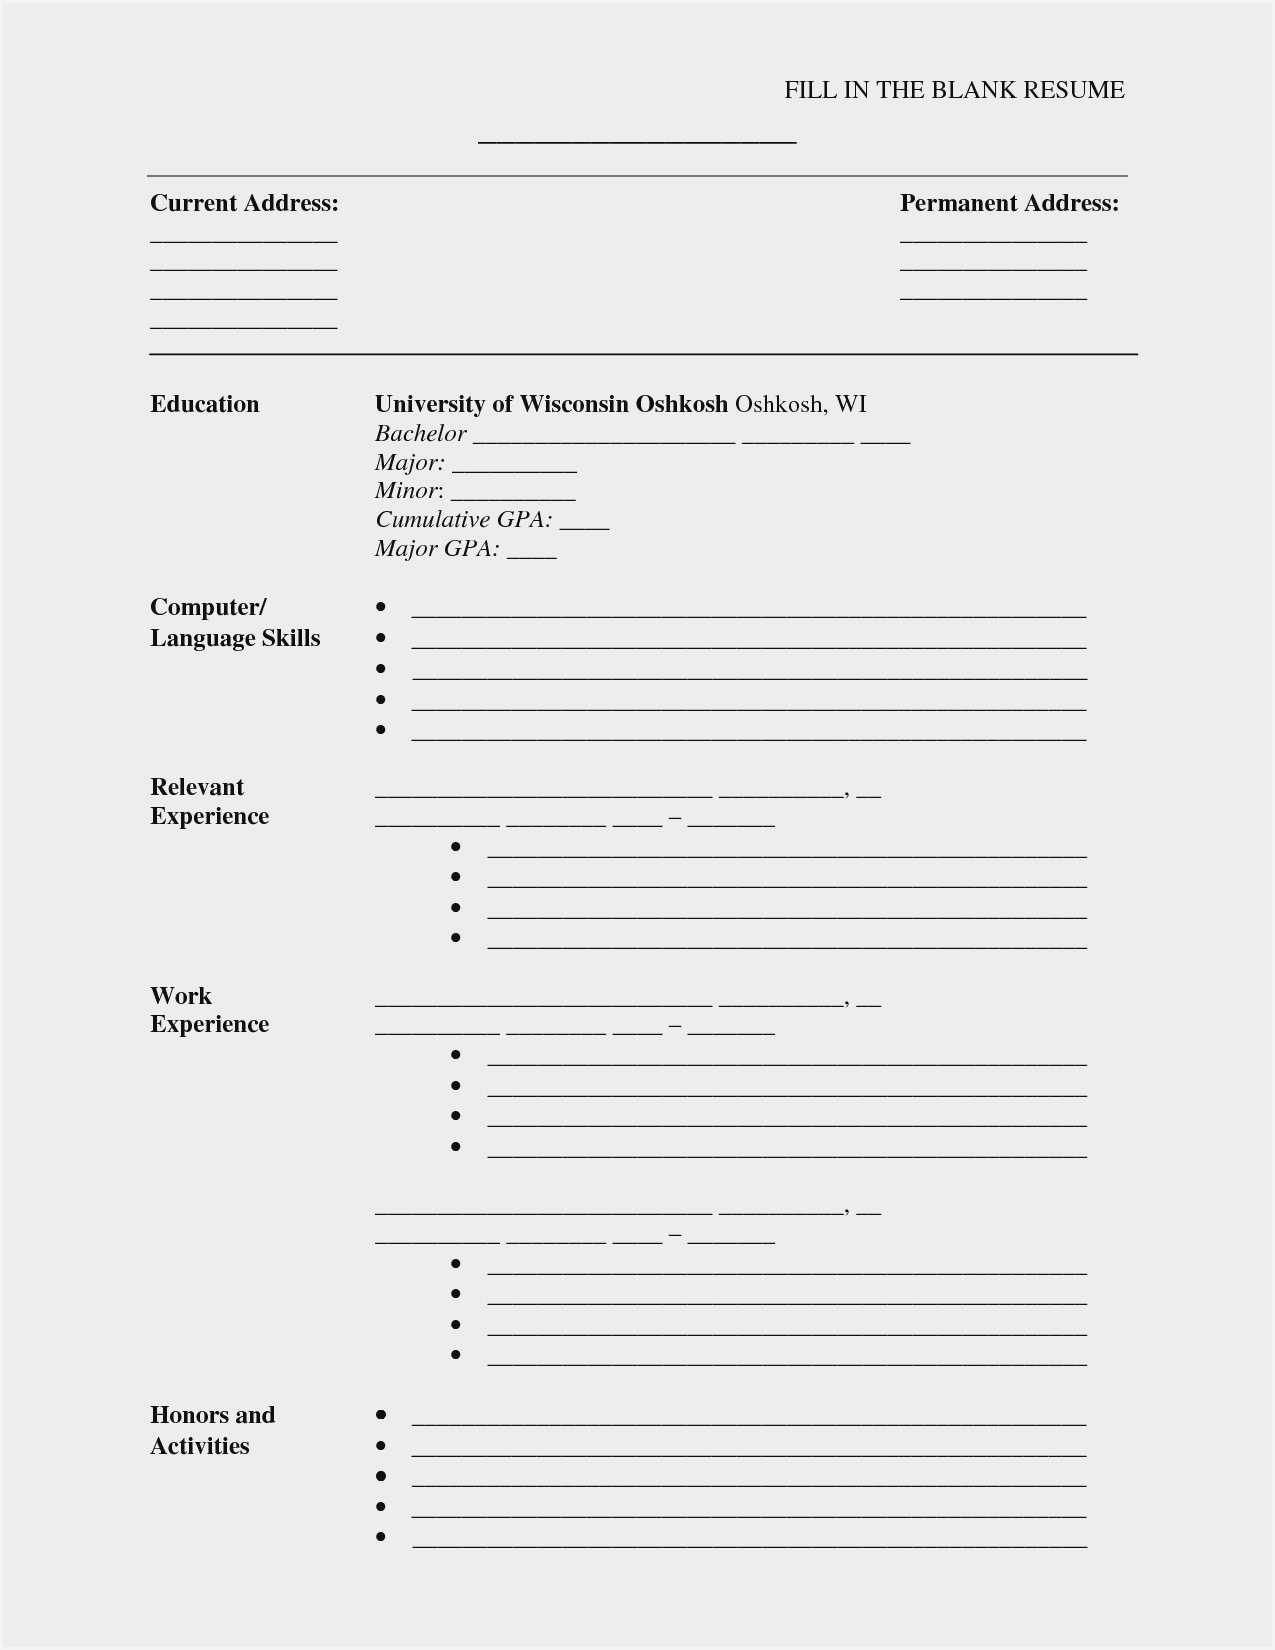 Resume Blank Format Free Download – Resume : Resume Sample #2712 Regarding Free Bio Template Fill In Blank